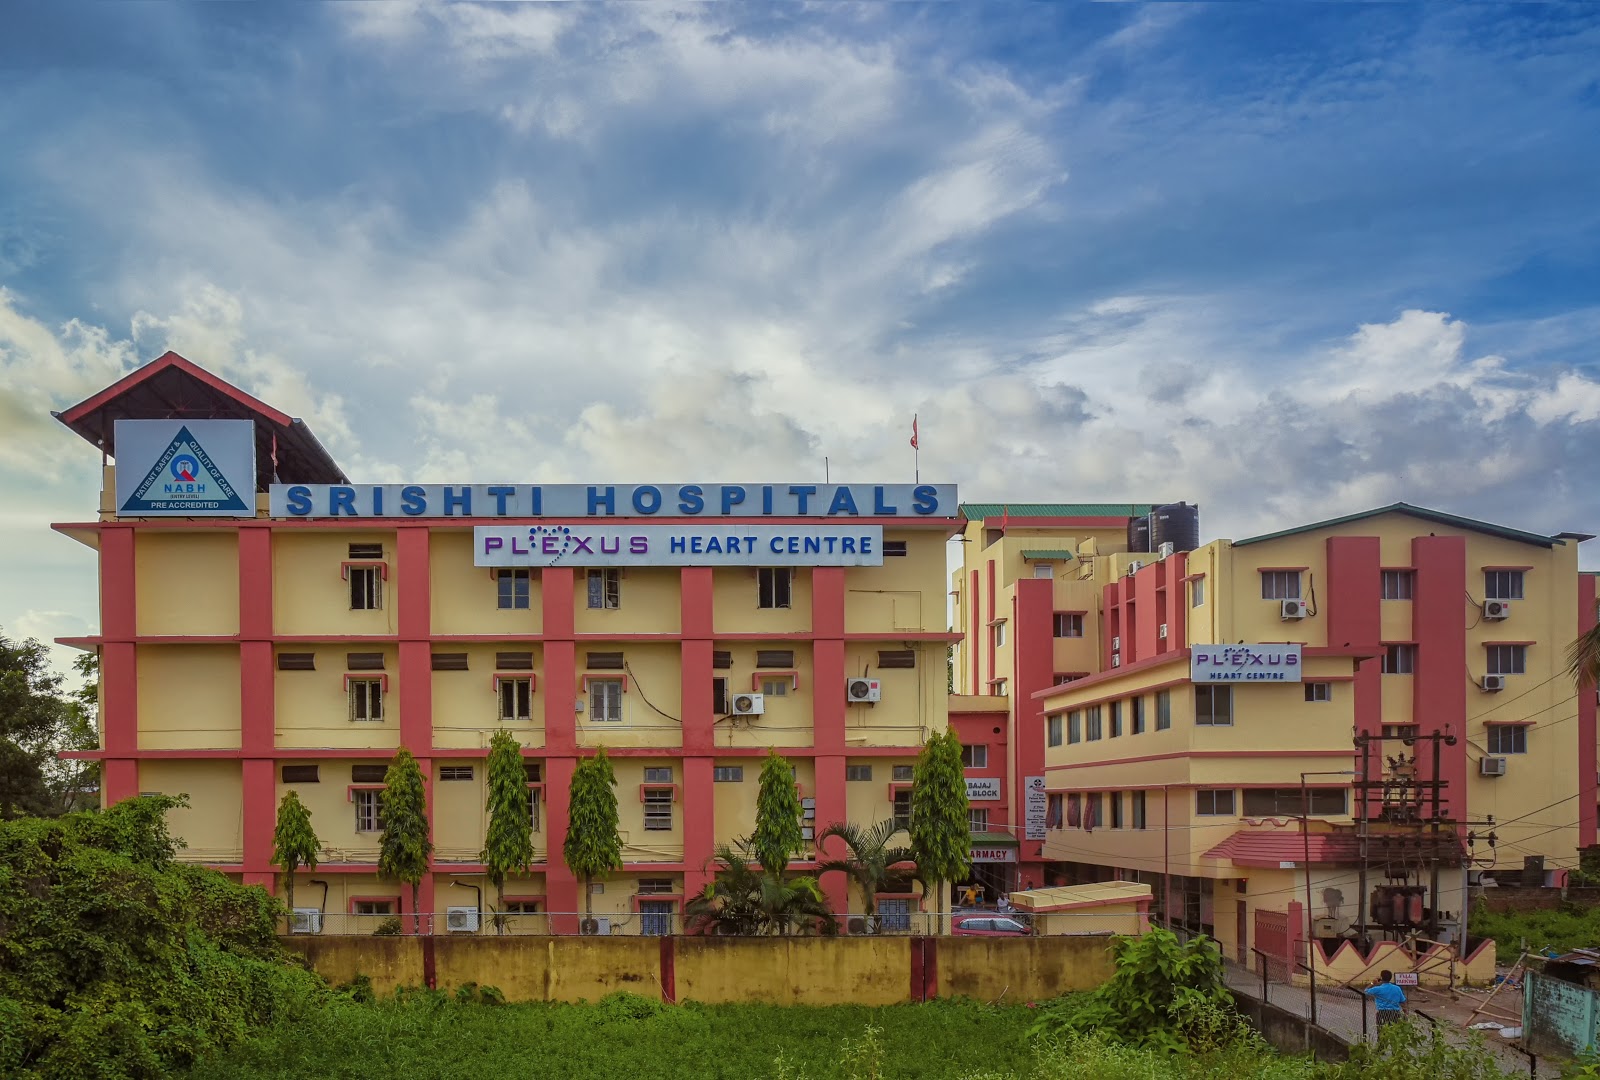 Modhuting TE Hospital